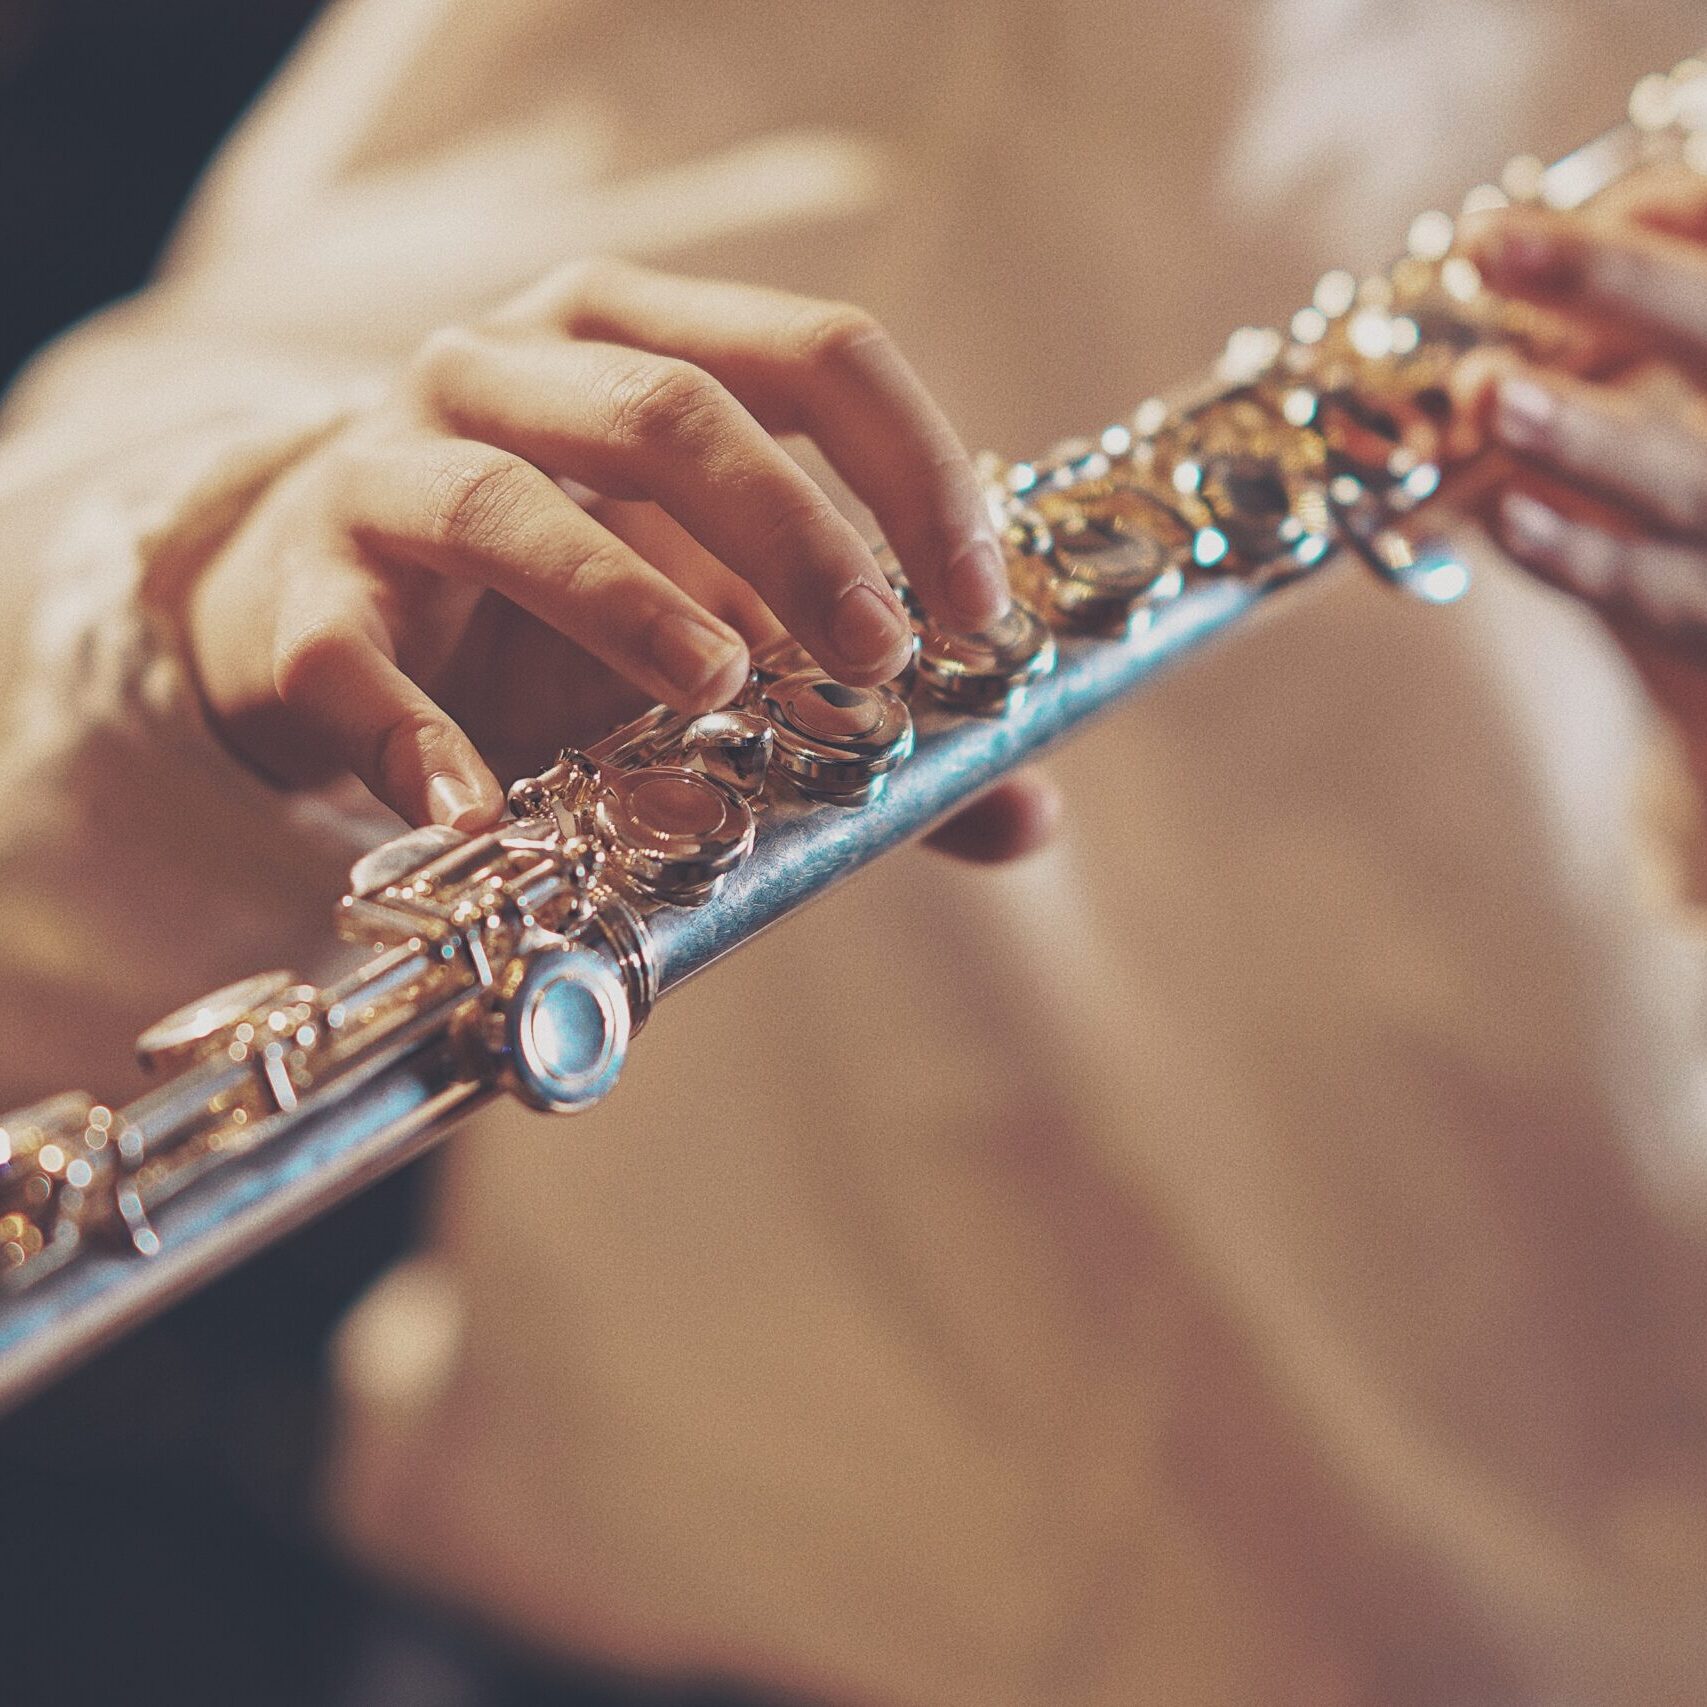 flauta-transversal-performance-escola-de-musica